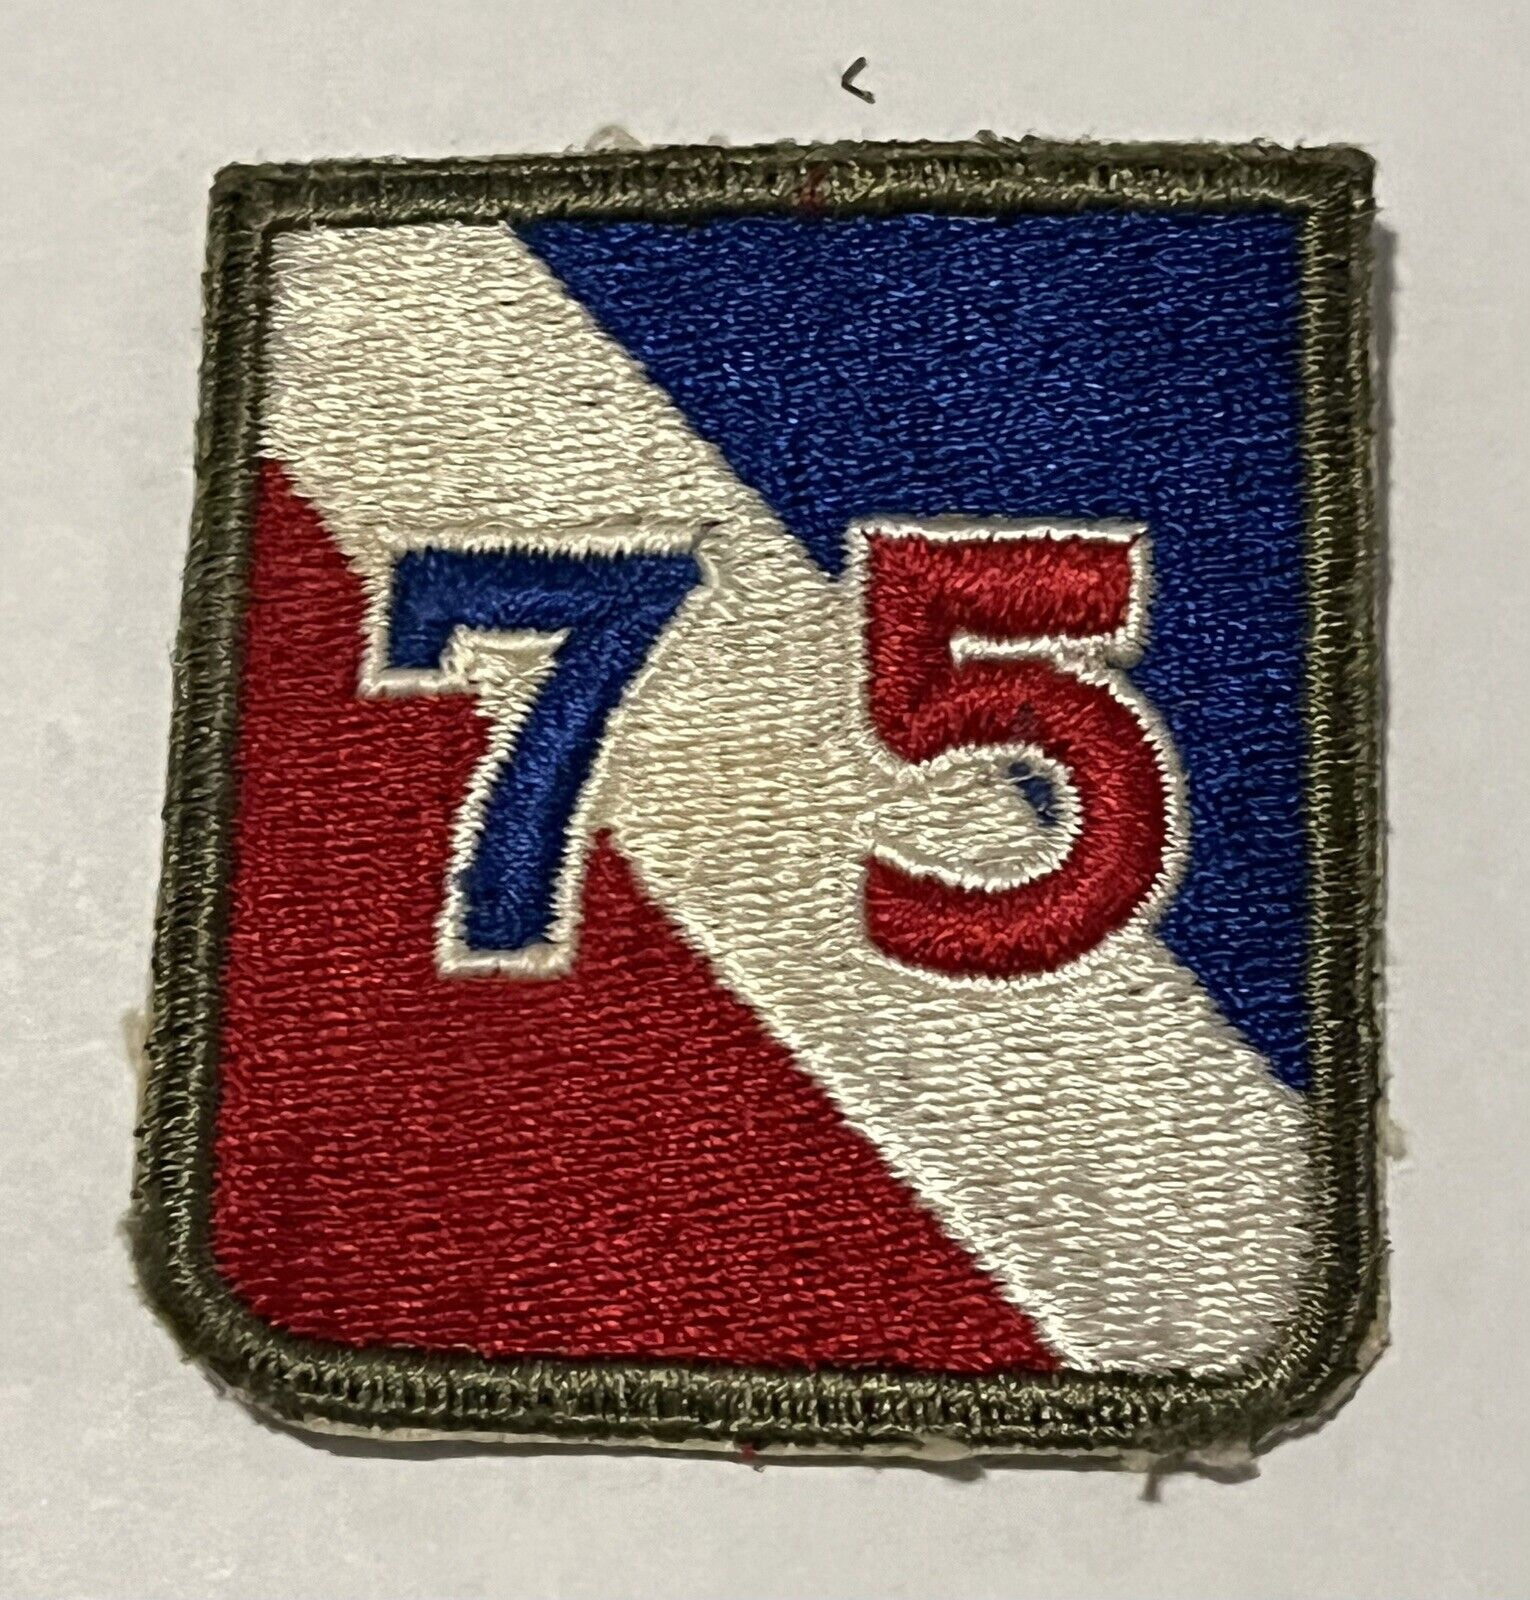 WW2 US Army 75th Infantry Division Uniform Shoulder Patch No Glow WHITEBACK